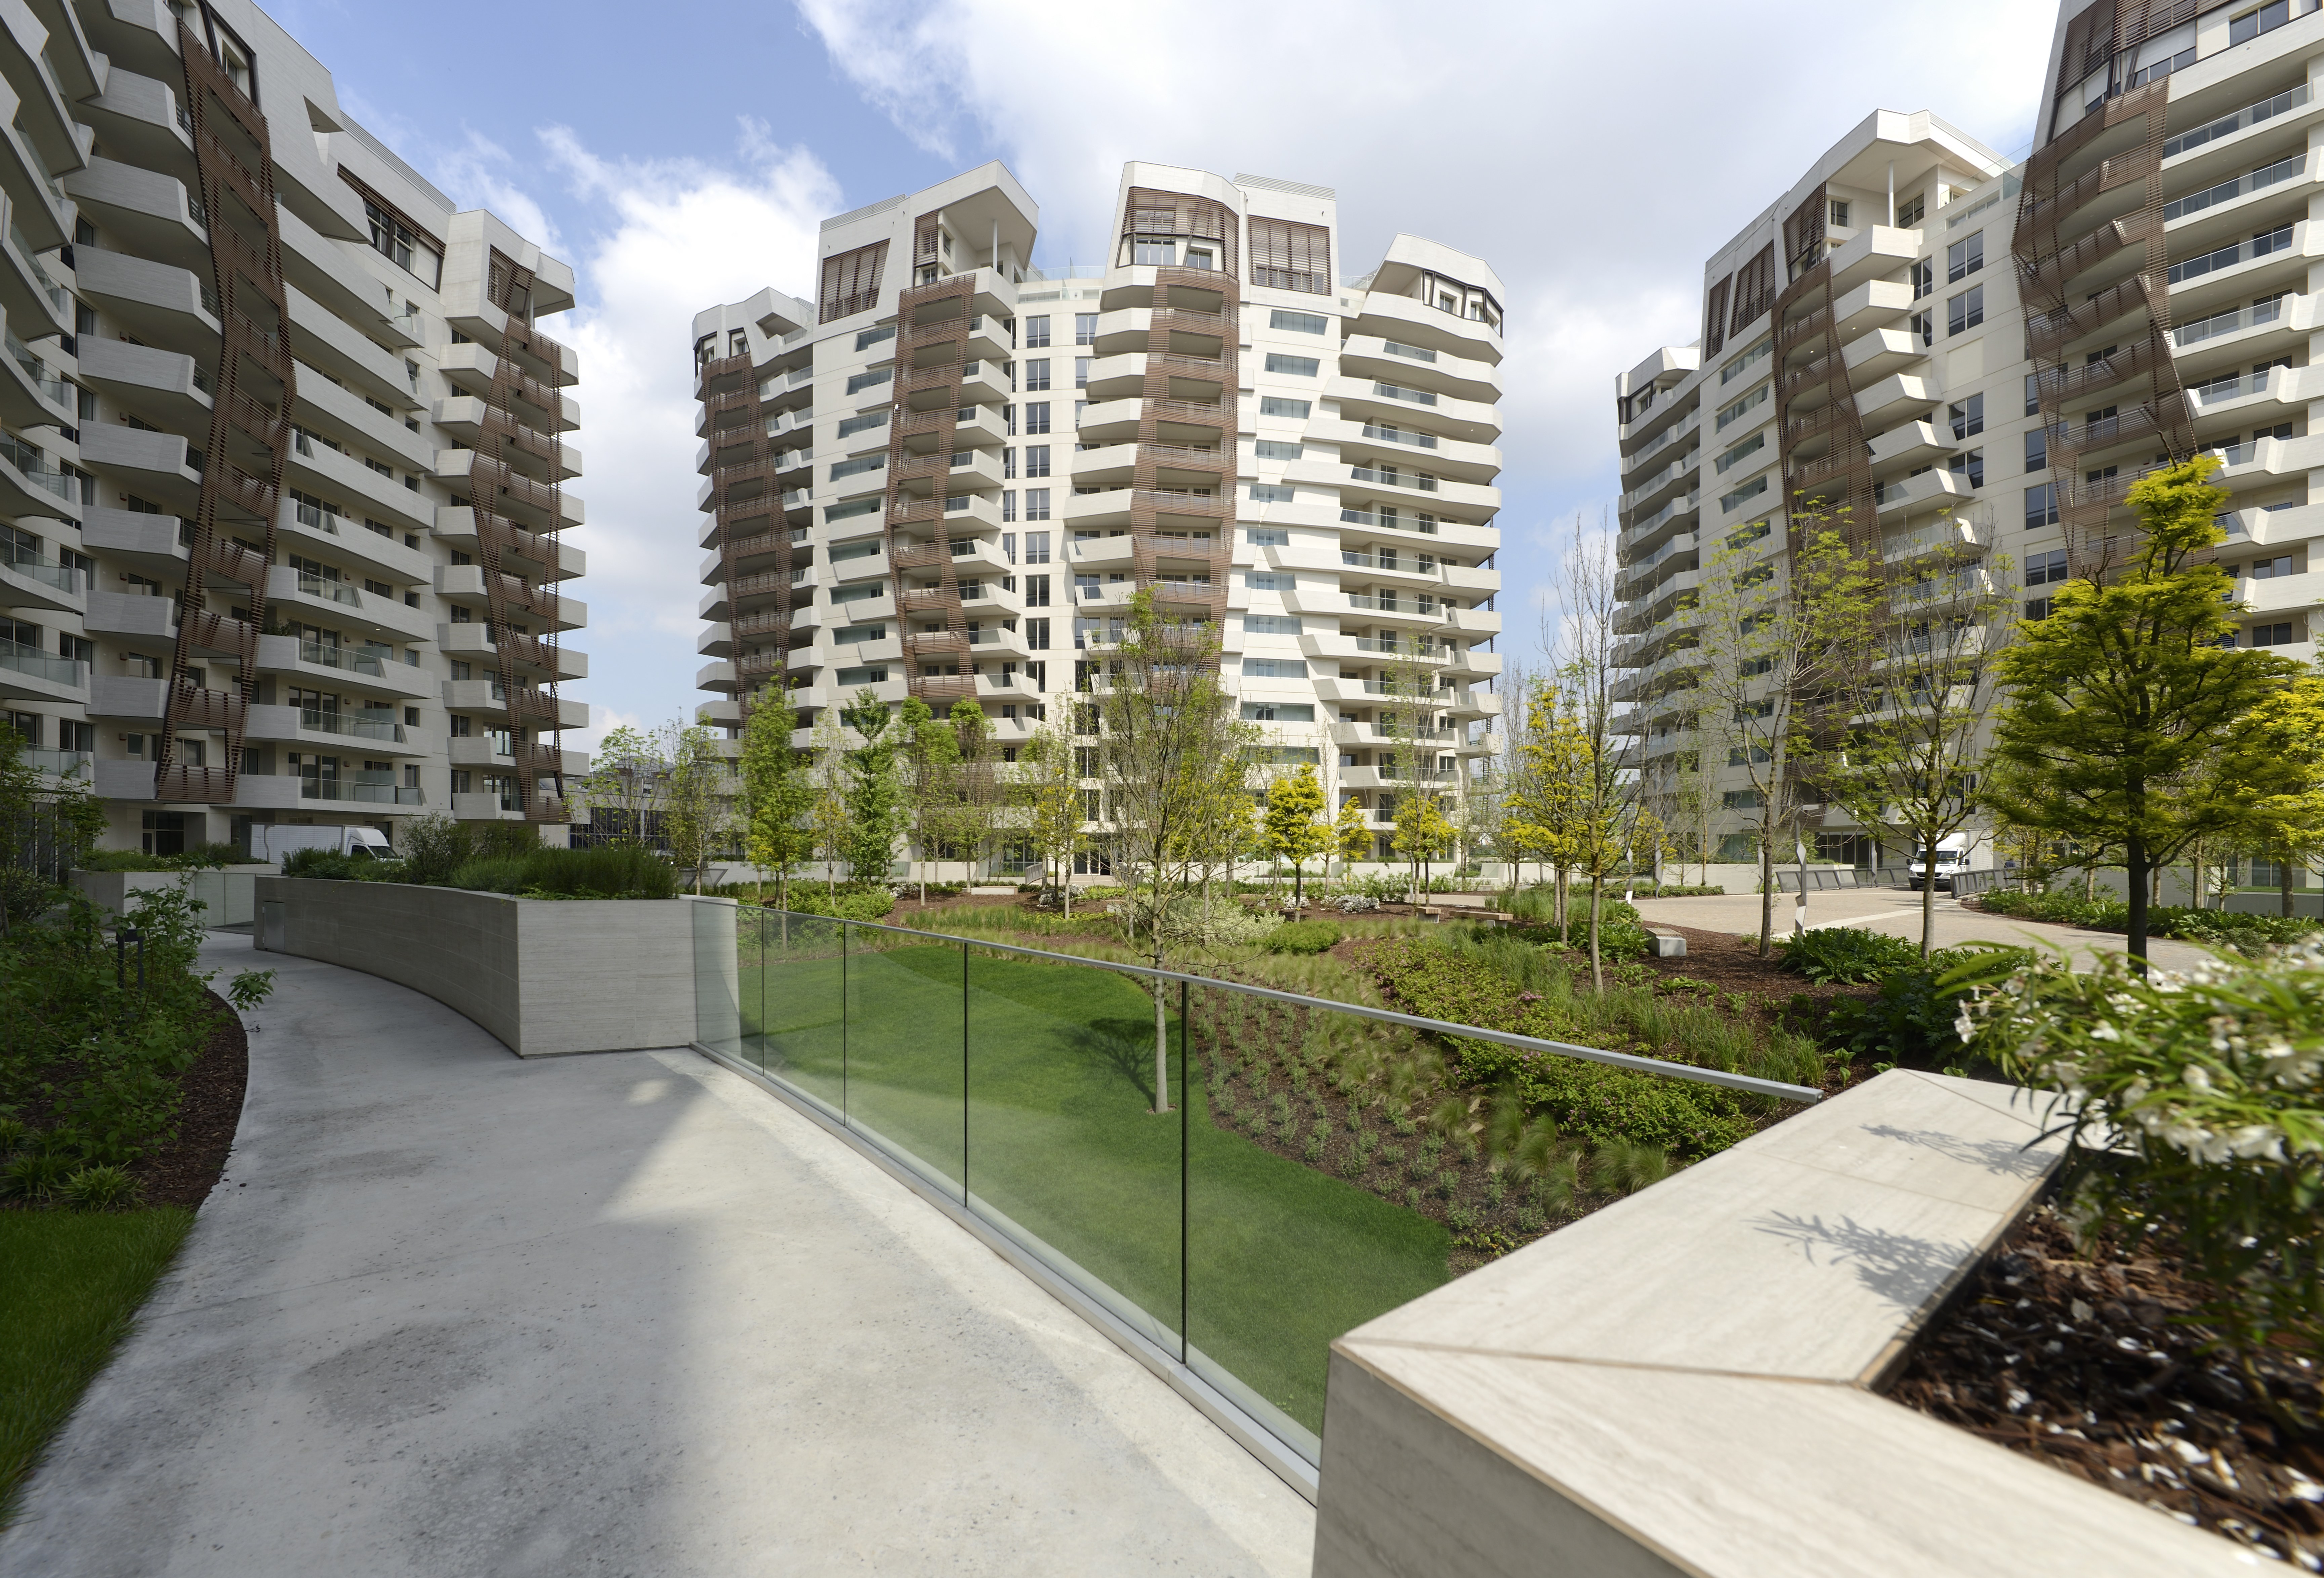 Tour Daniel Libeskind's New Apartment Complex in Milan ...